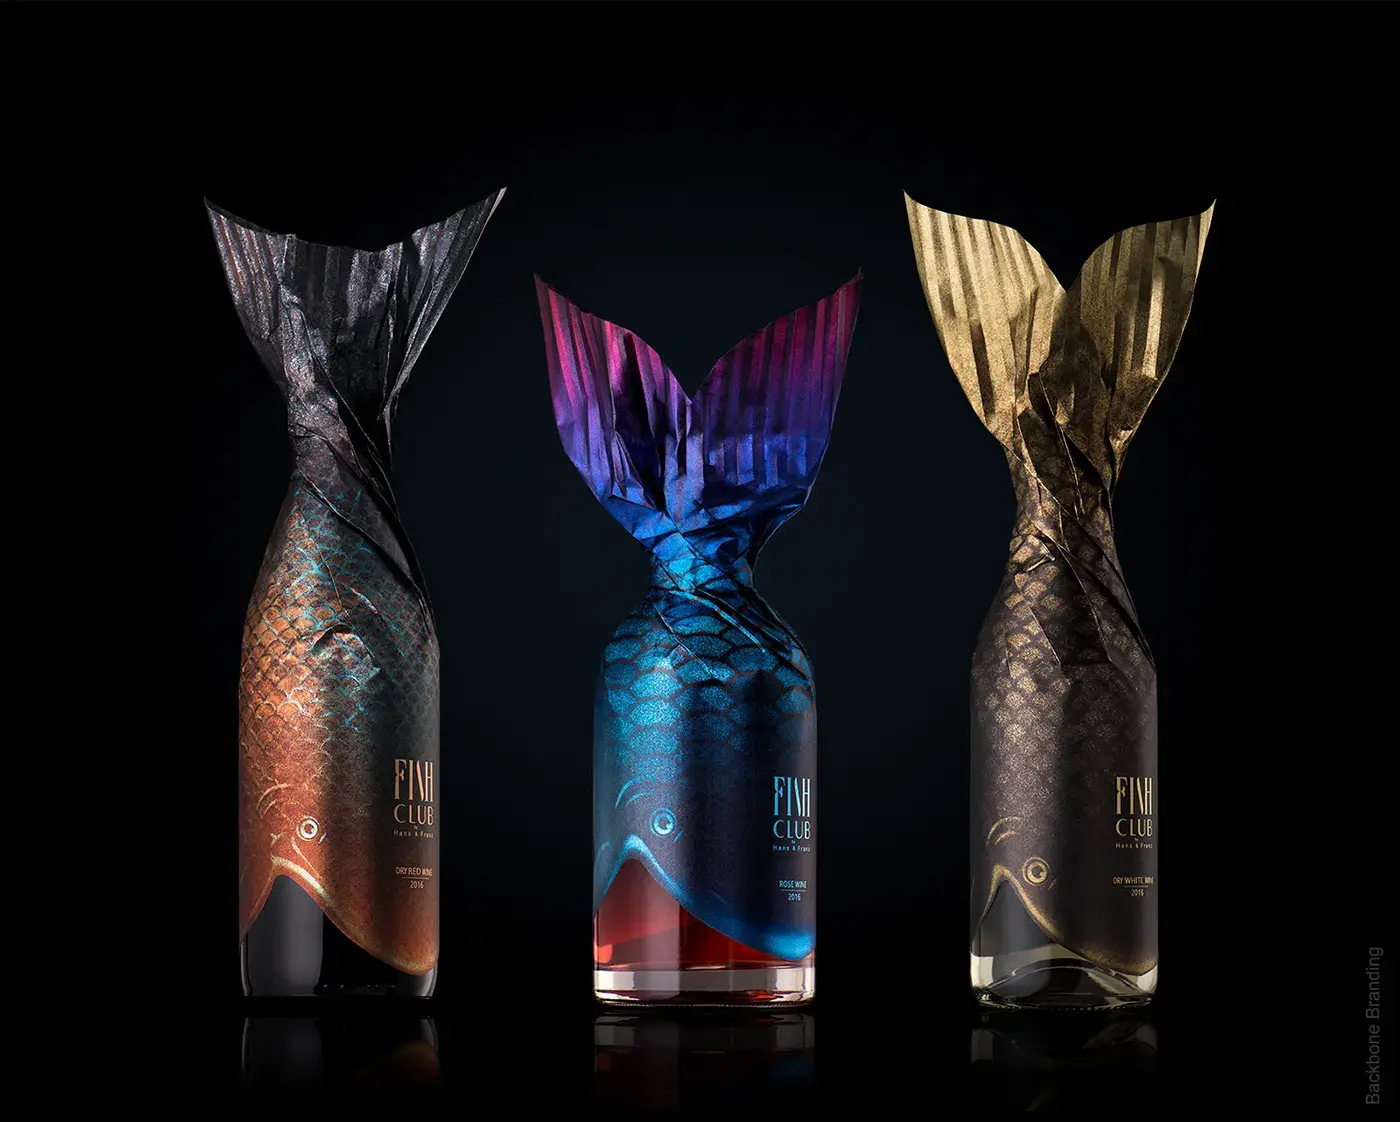 Blogduwebdesign inspiration packagings originaux innovants fish club wine